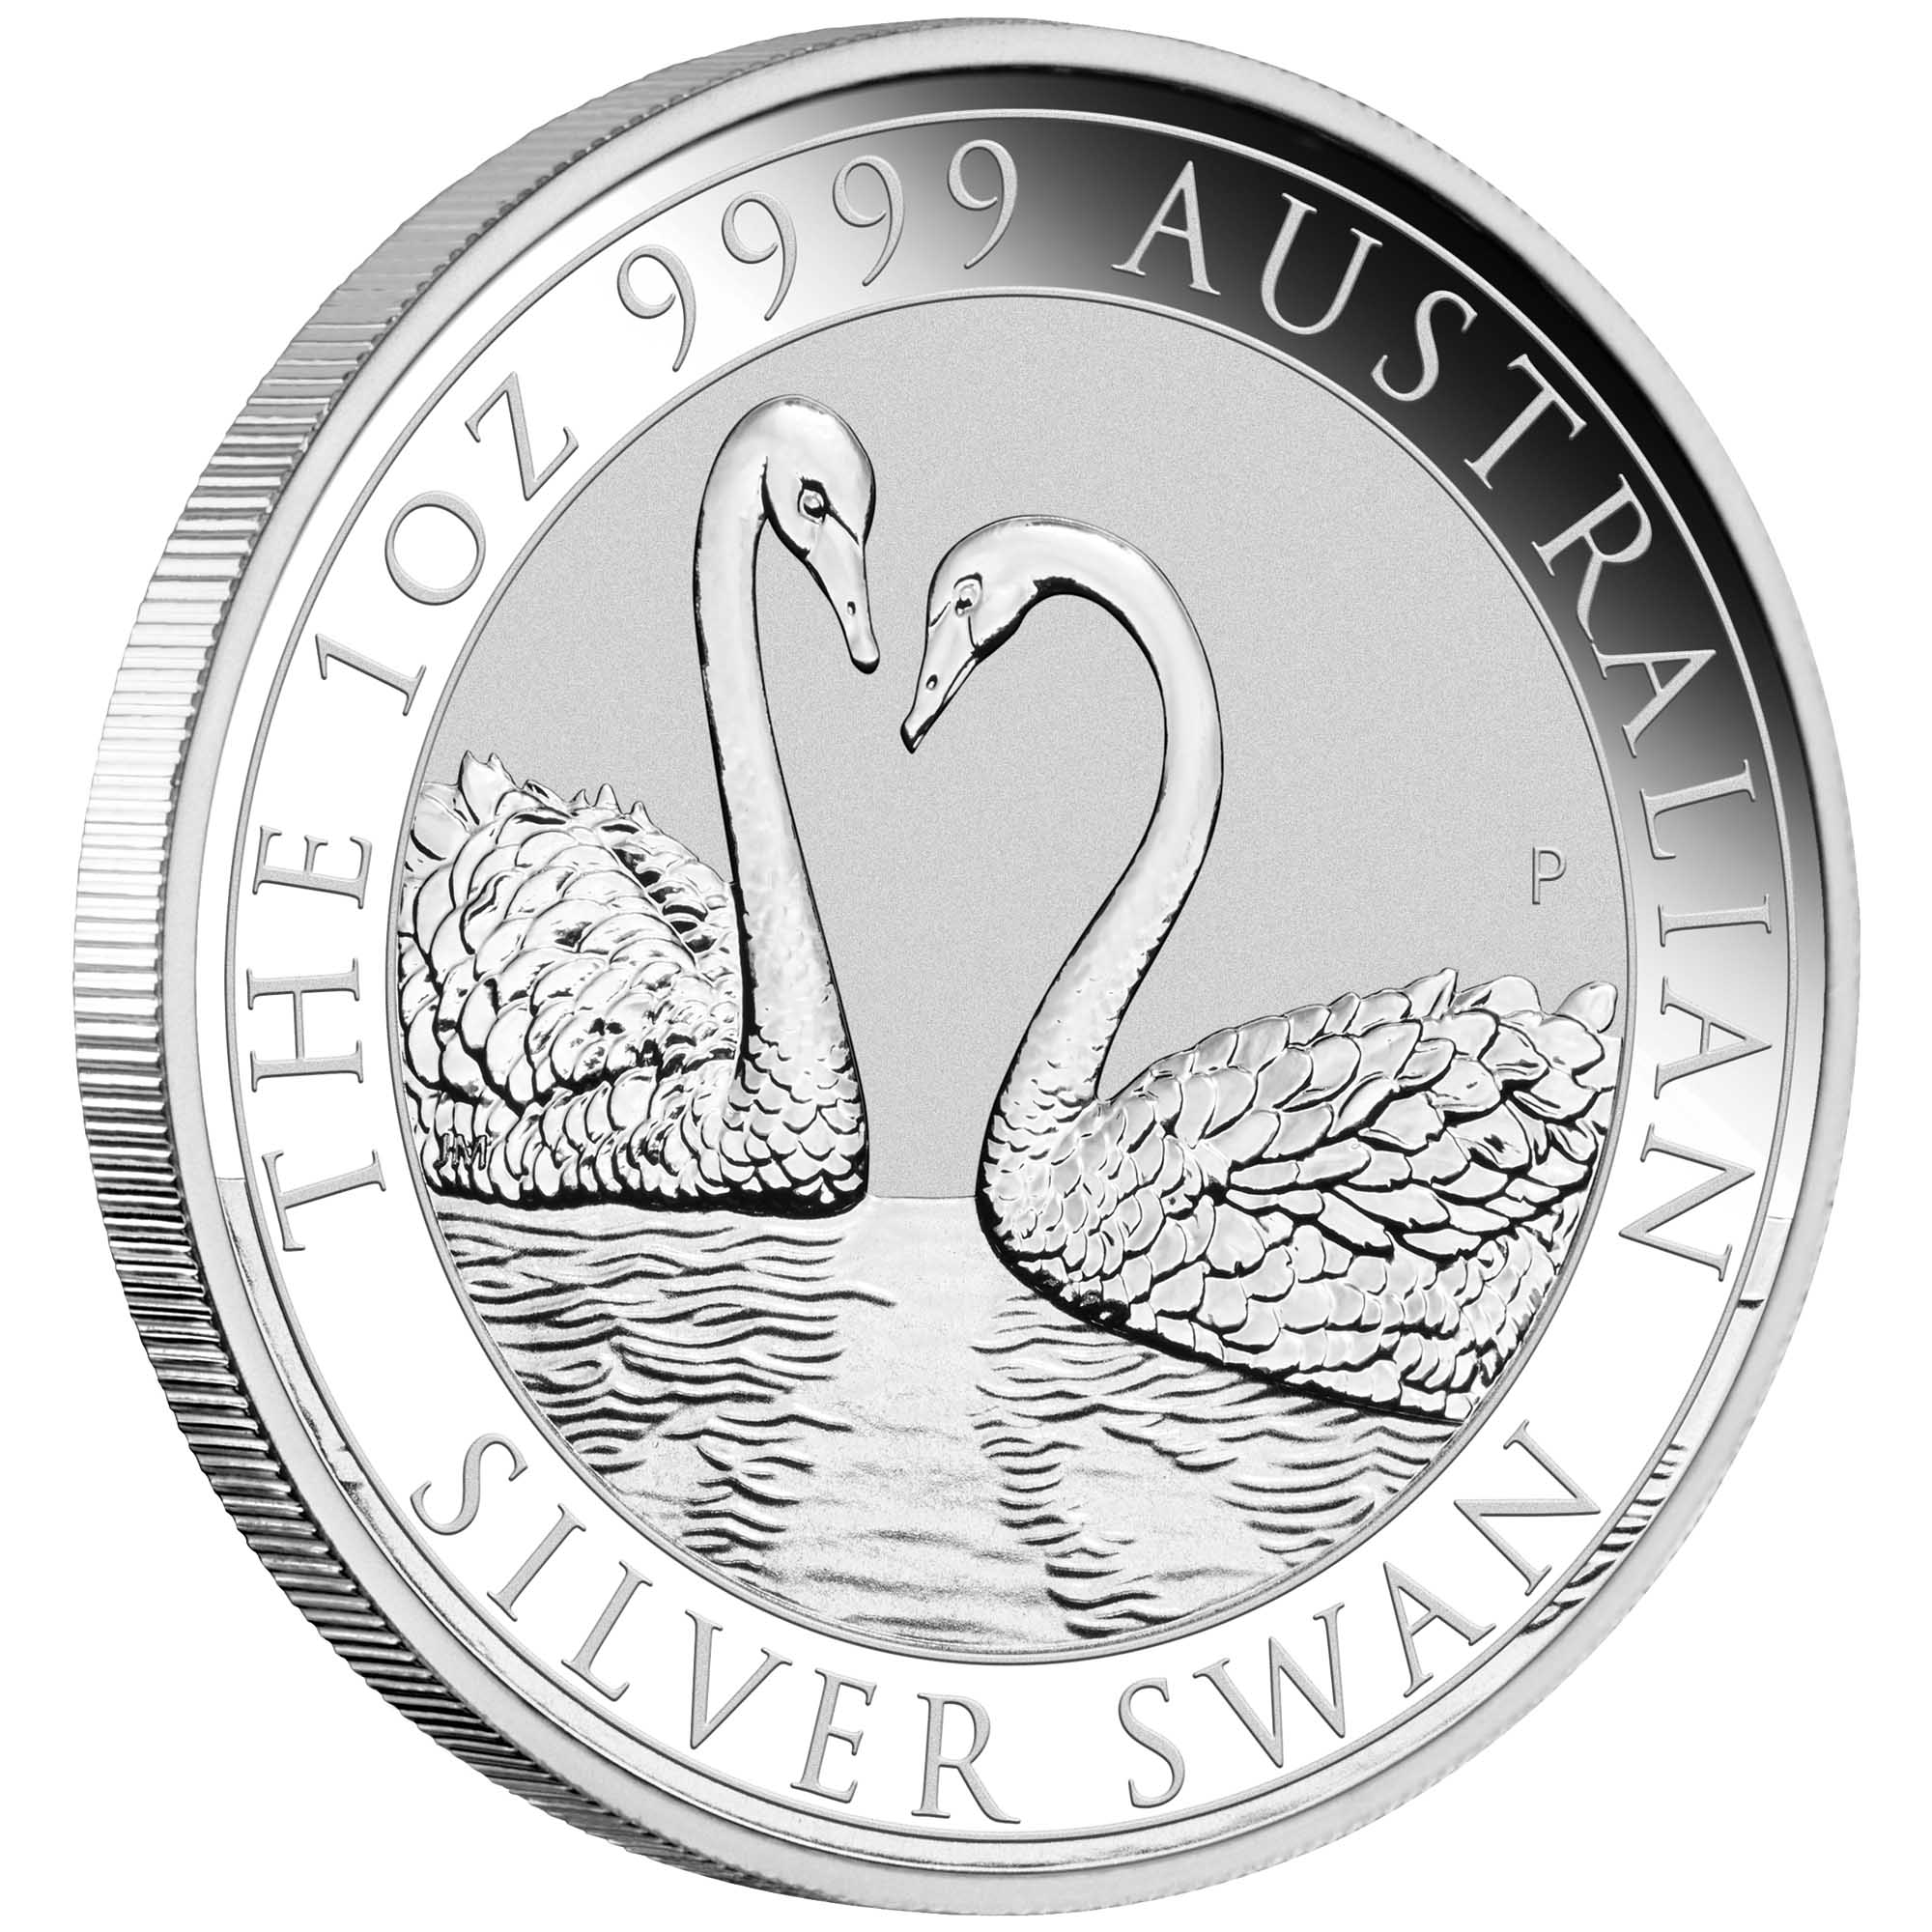 AUSTRALIA SWAN CIGNO 2022 1 oncia argento 9999 silver oz Perth Mint 